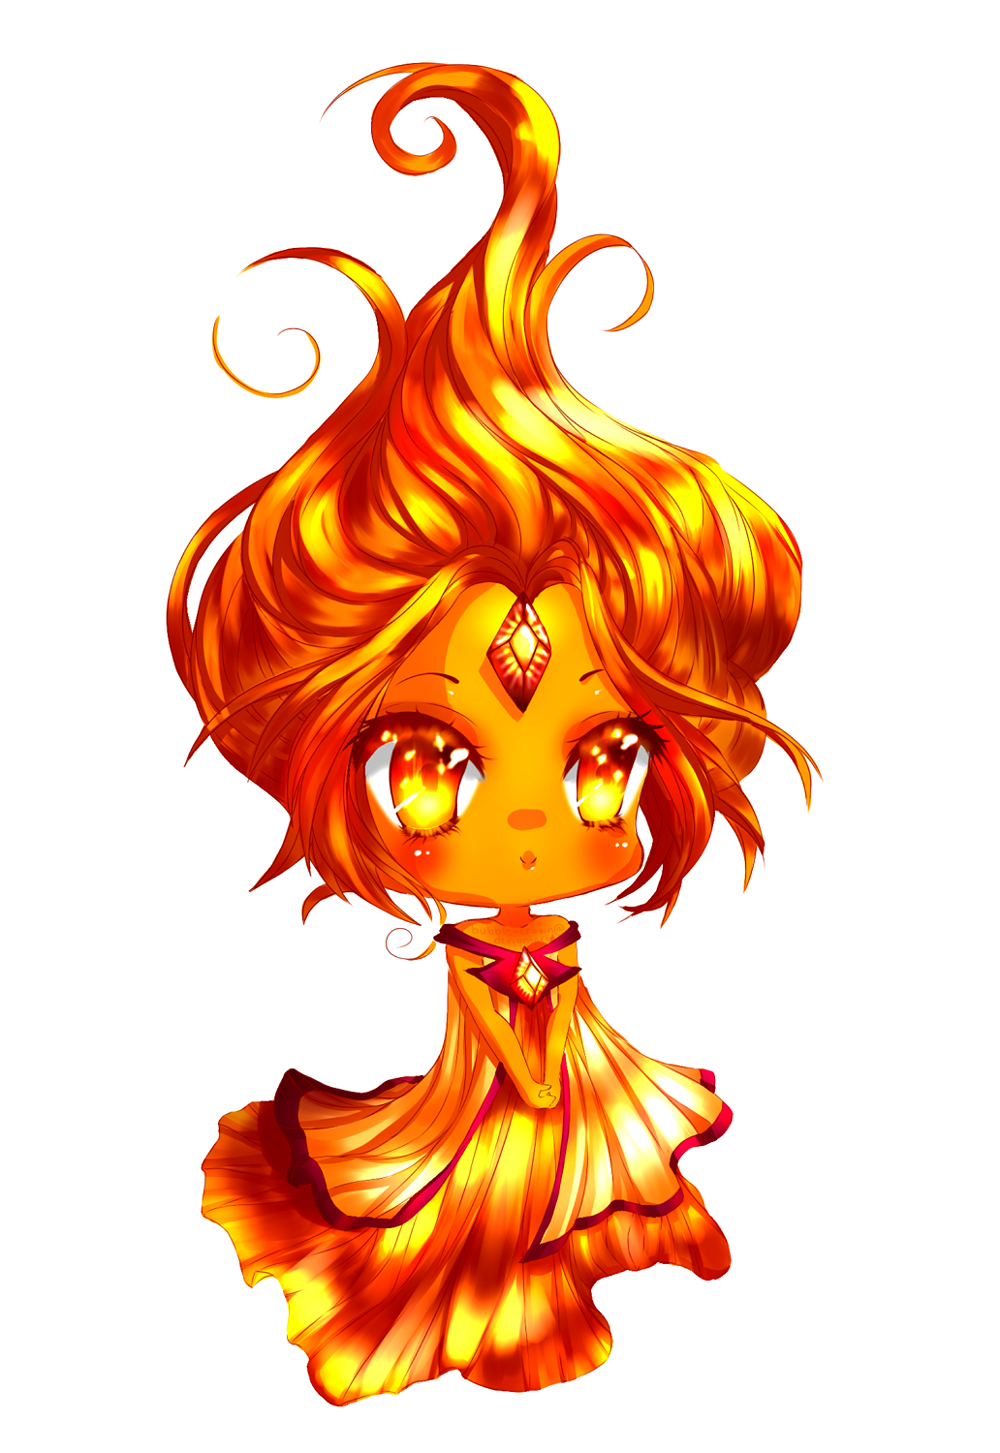 Most recent image: Flame Princess